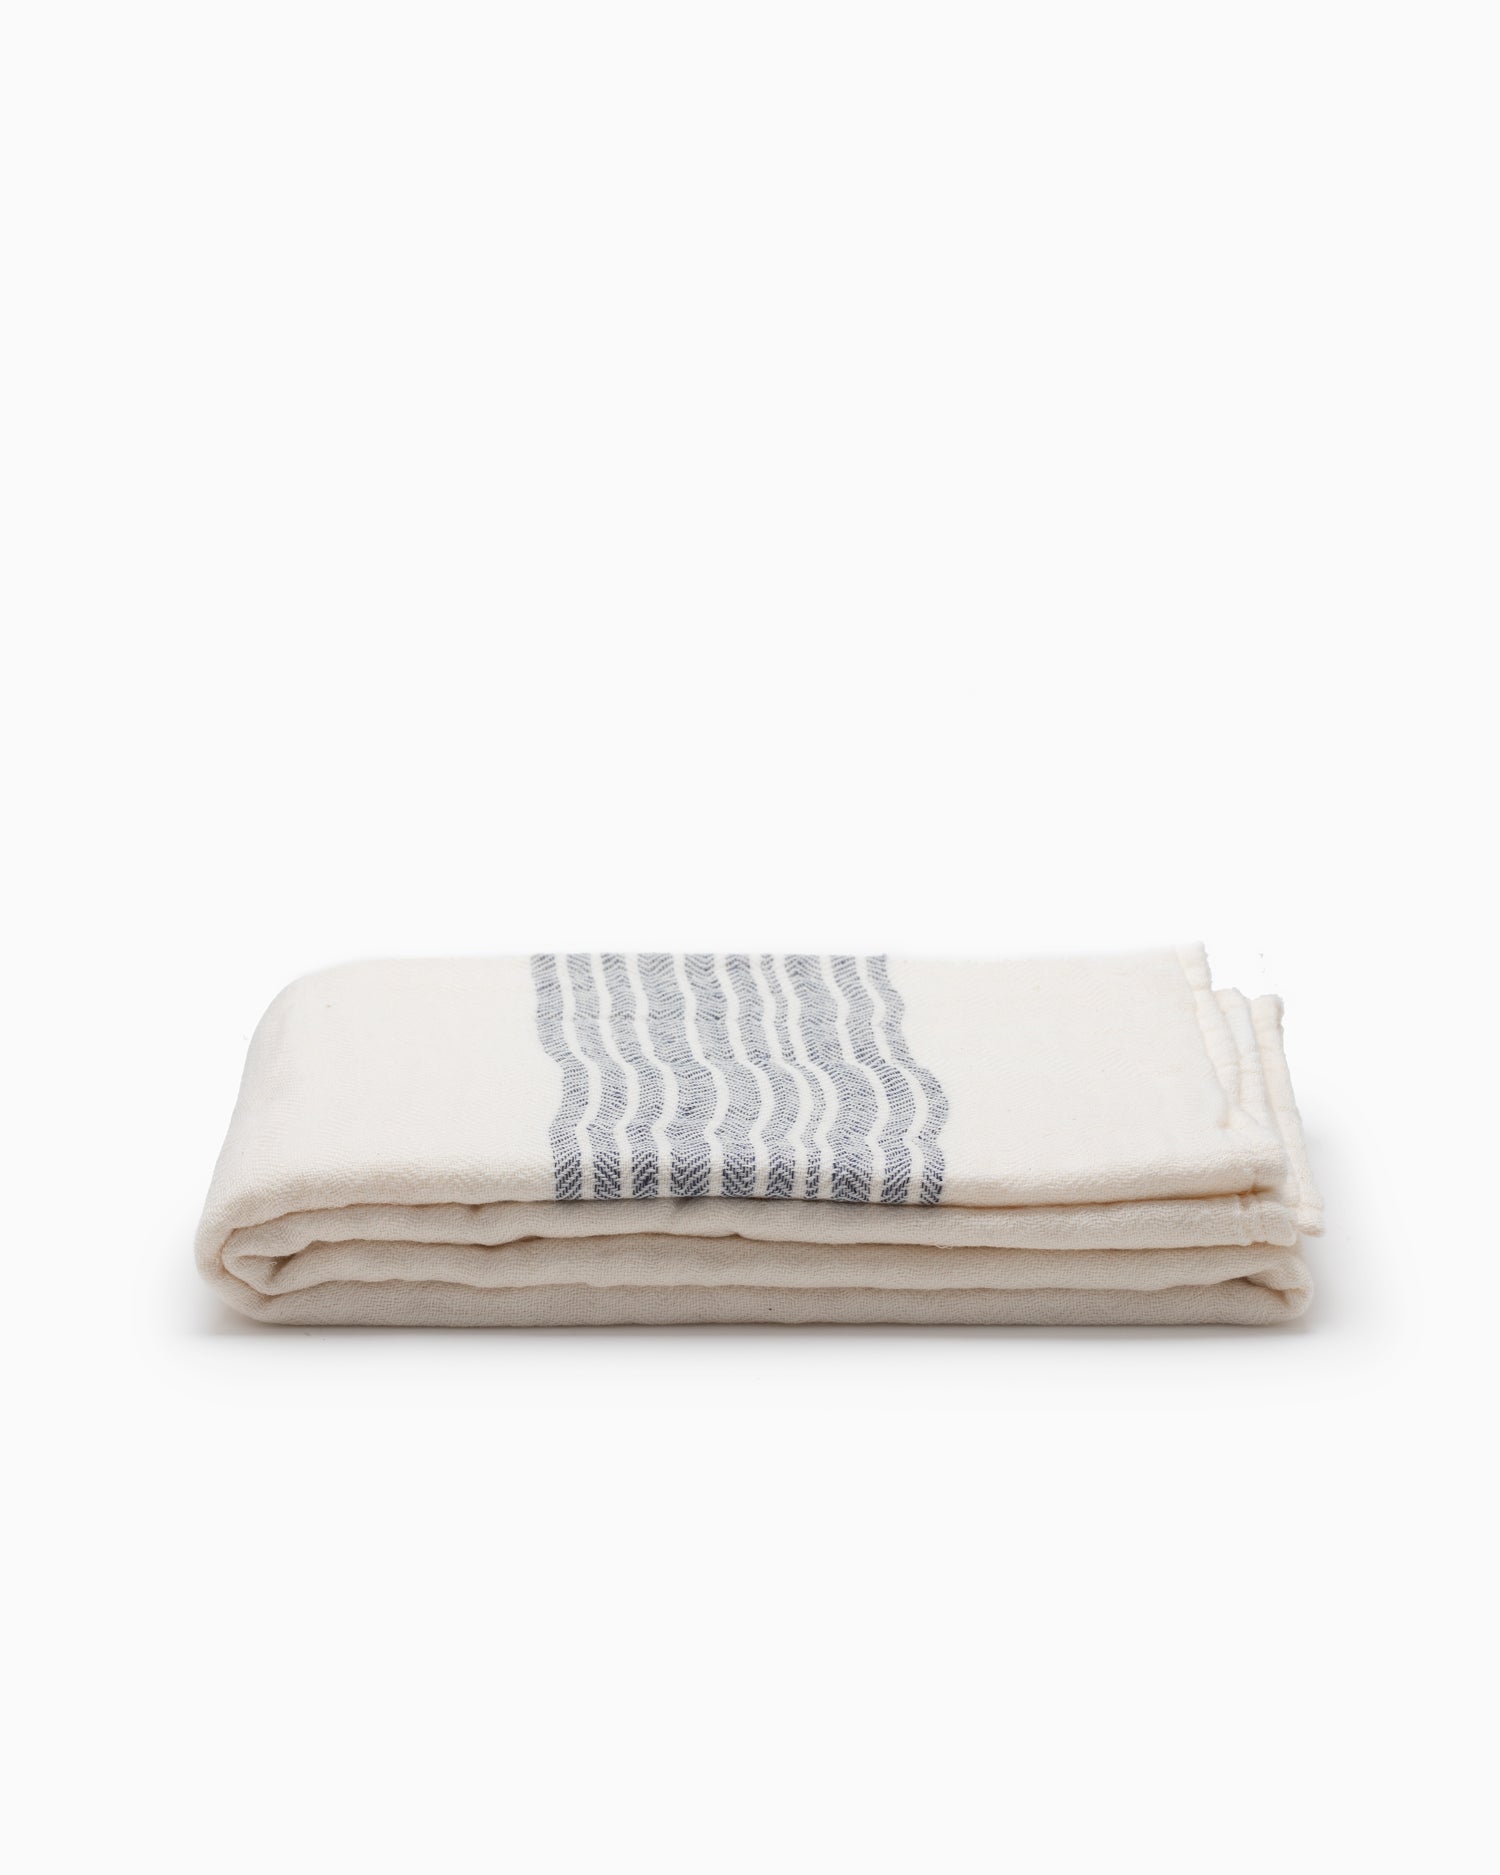 Flax Line Organic Compact Bath Towel - Navy/Ivory